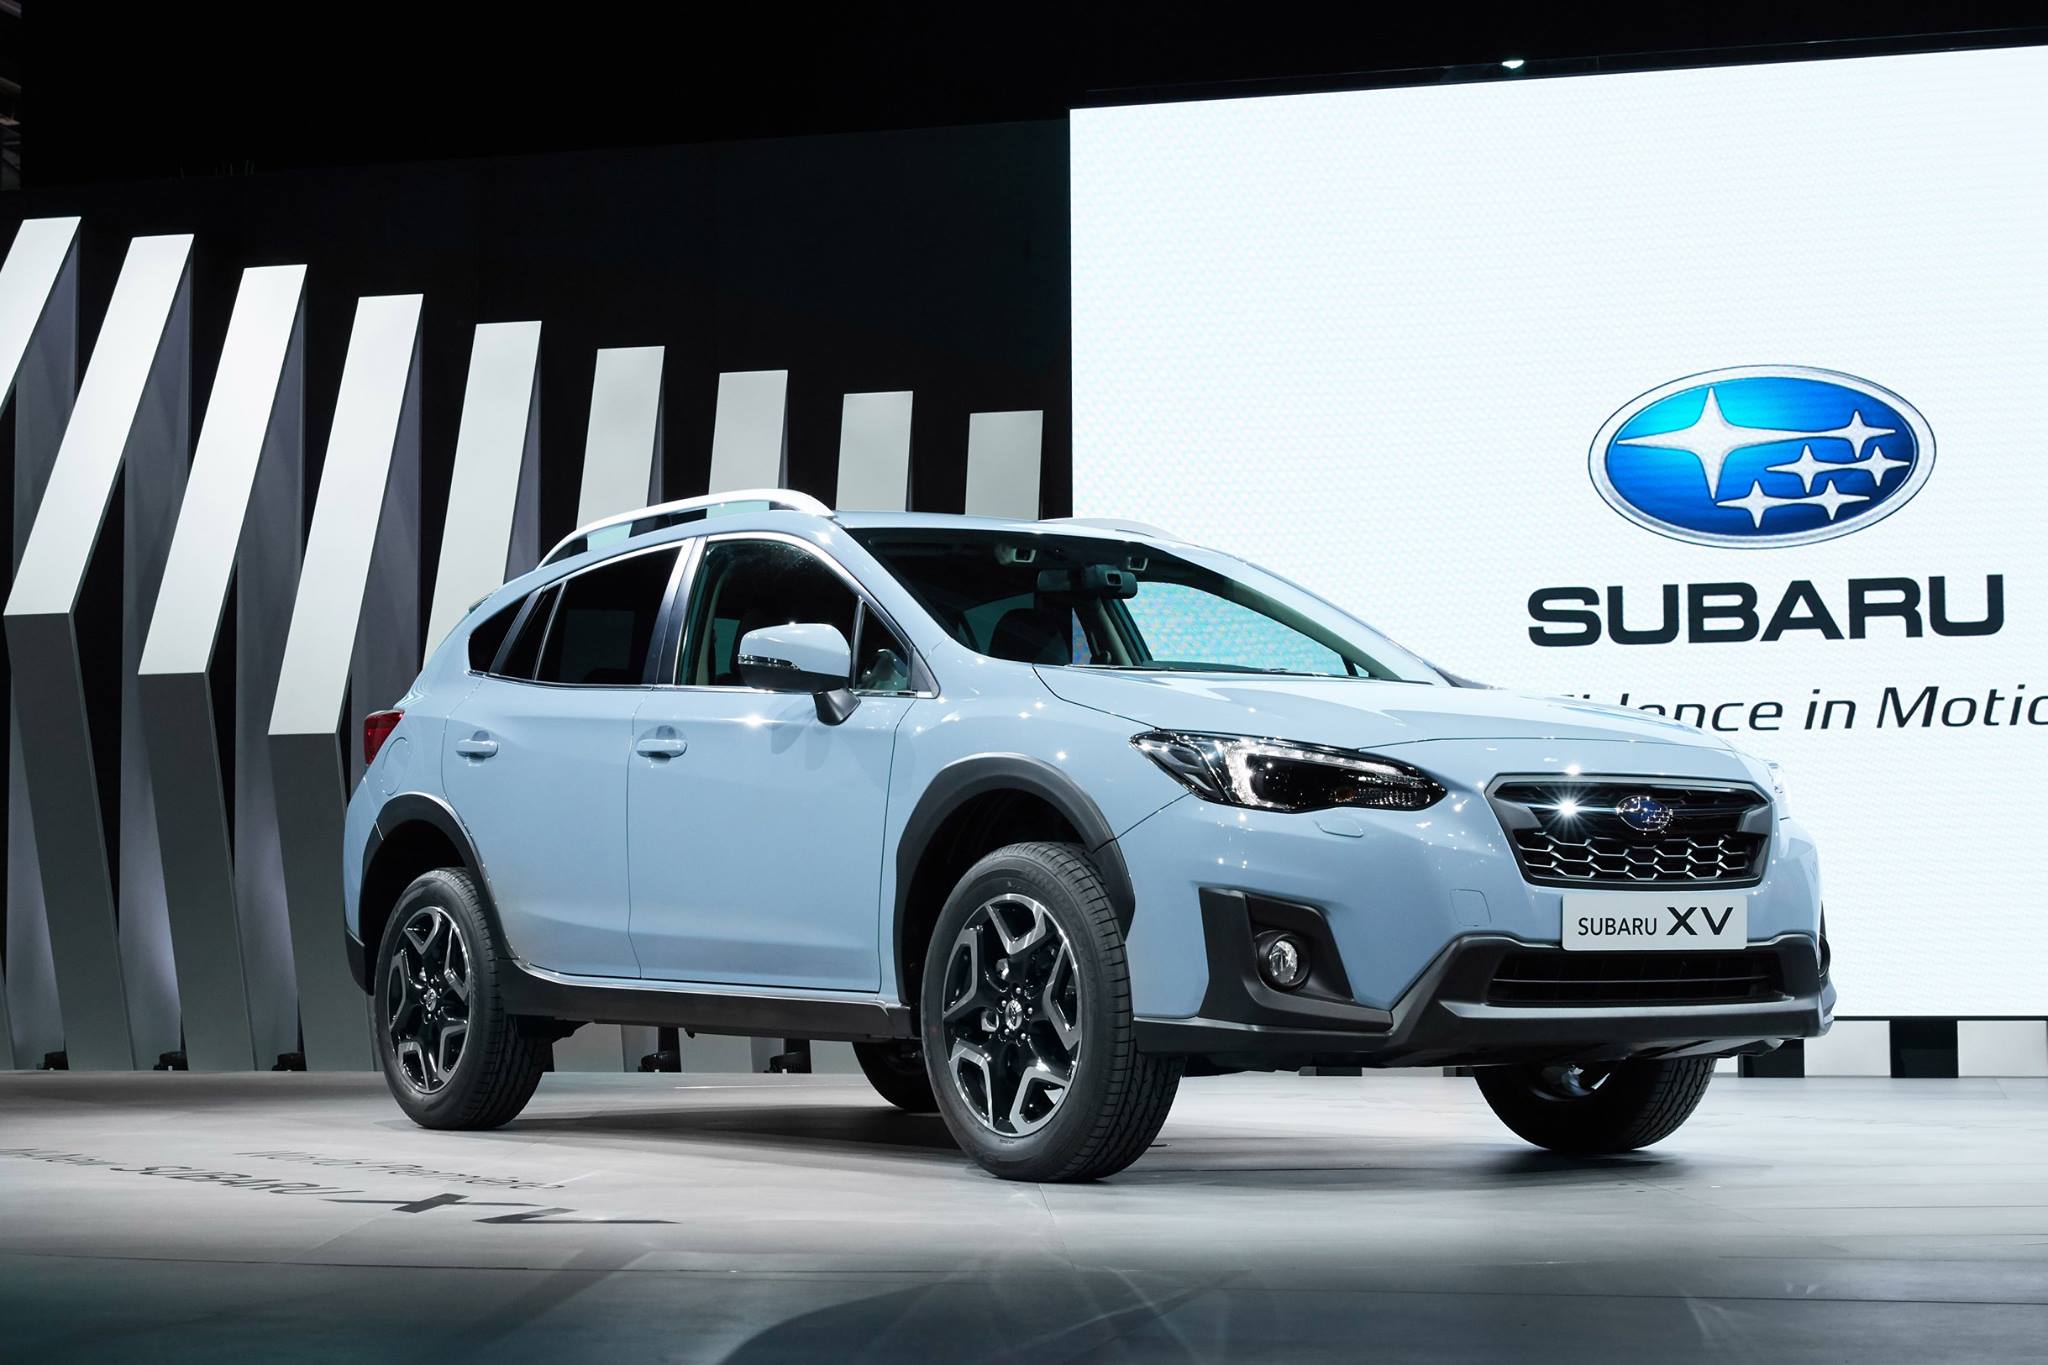 Chiếc xe Subaru XV 2018